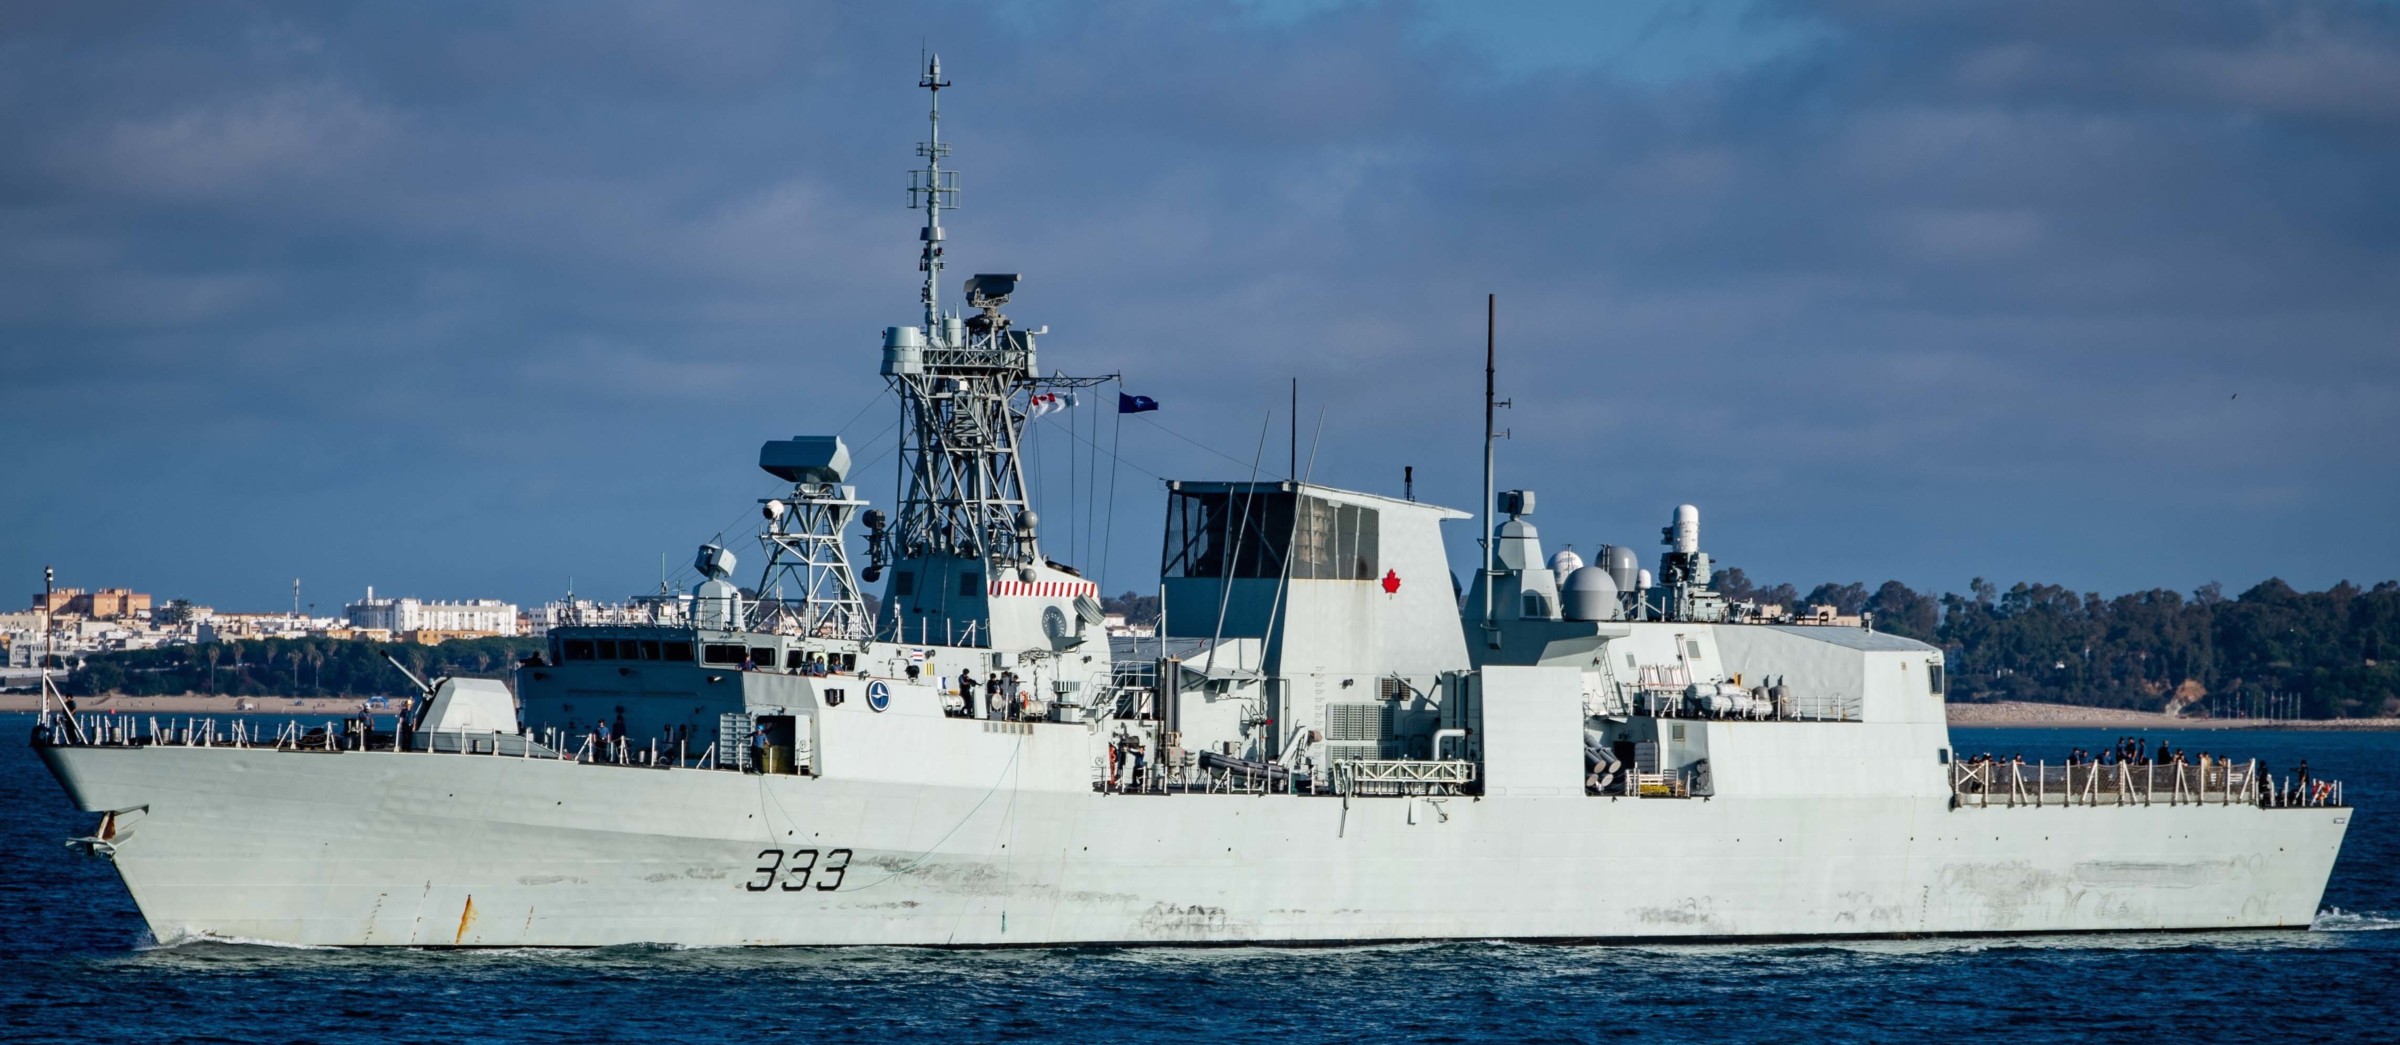 ffh-333 hmcs toronto halifax class helicopter patrol frigate ncsm royal canadian navy 10